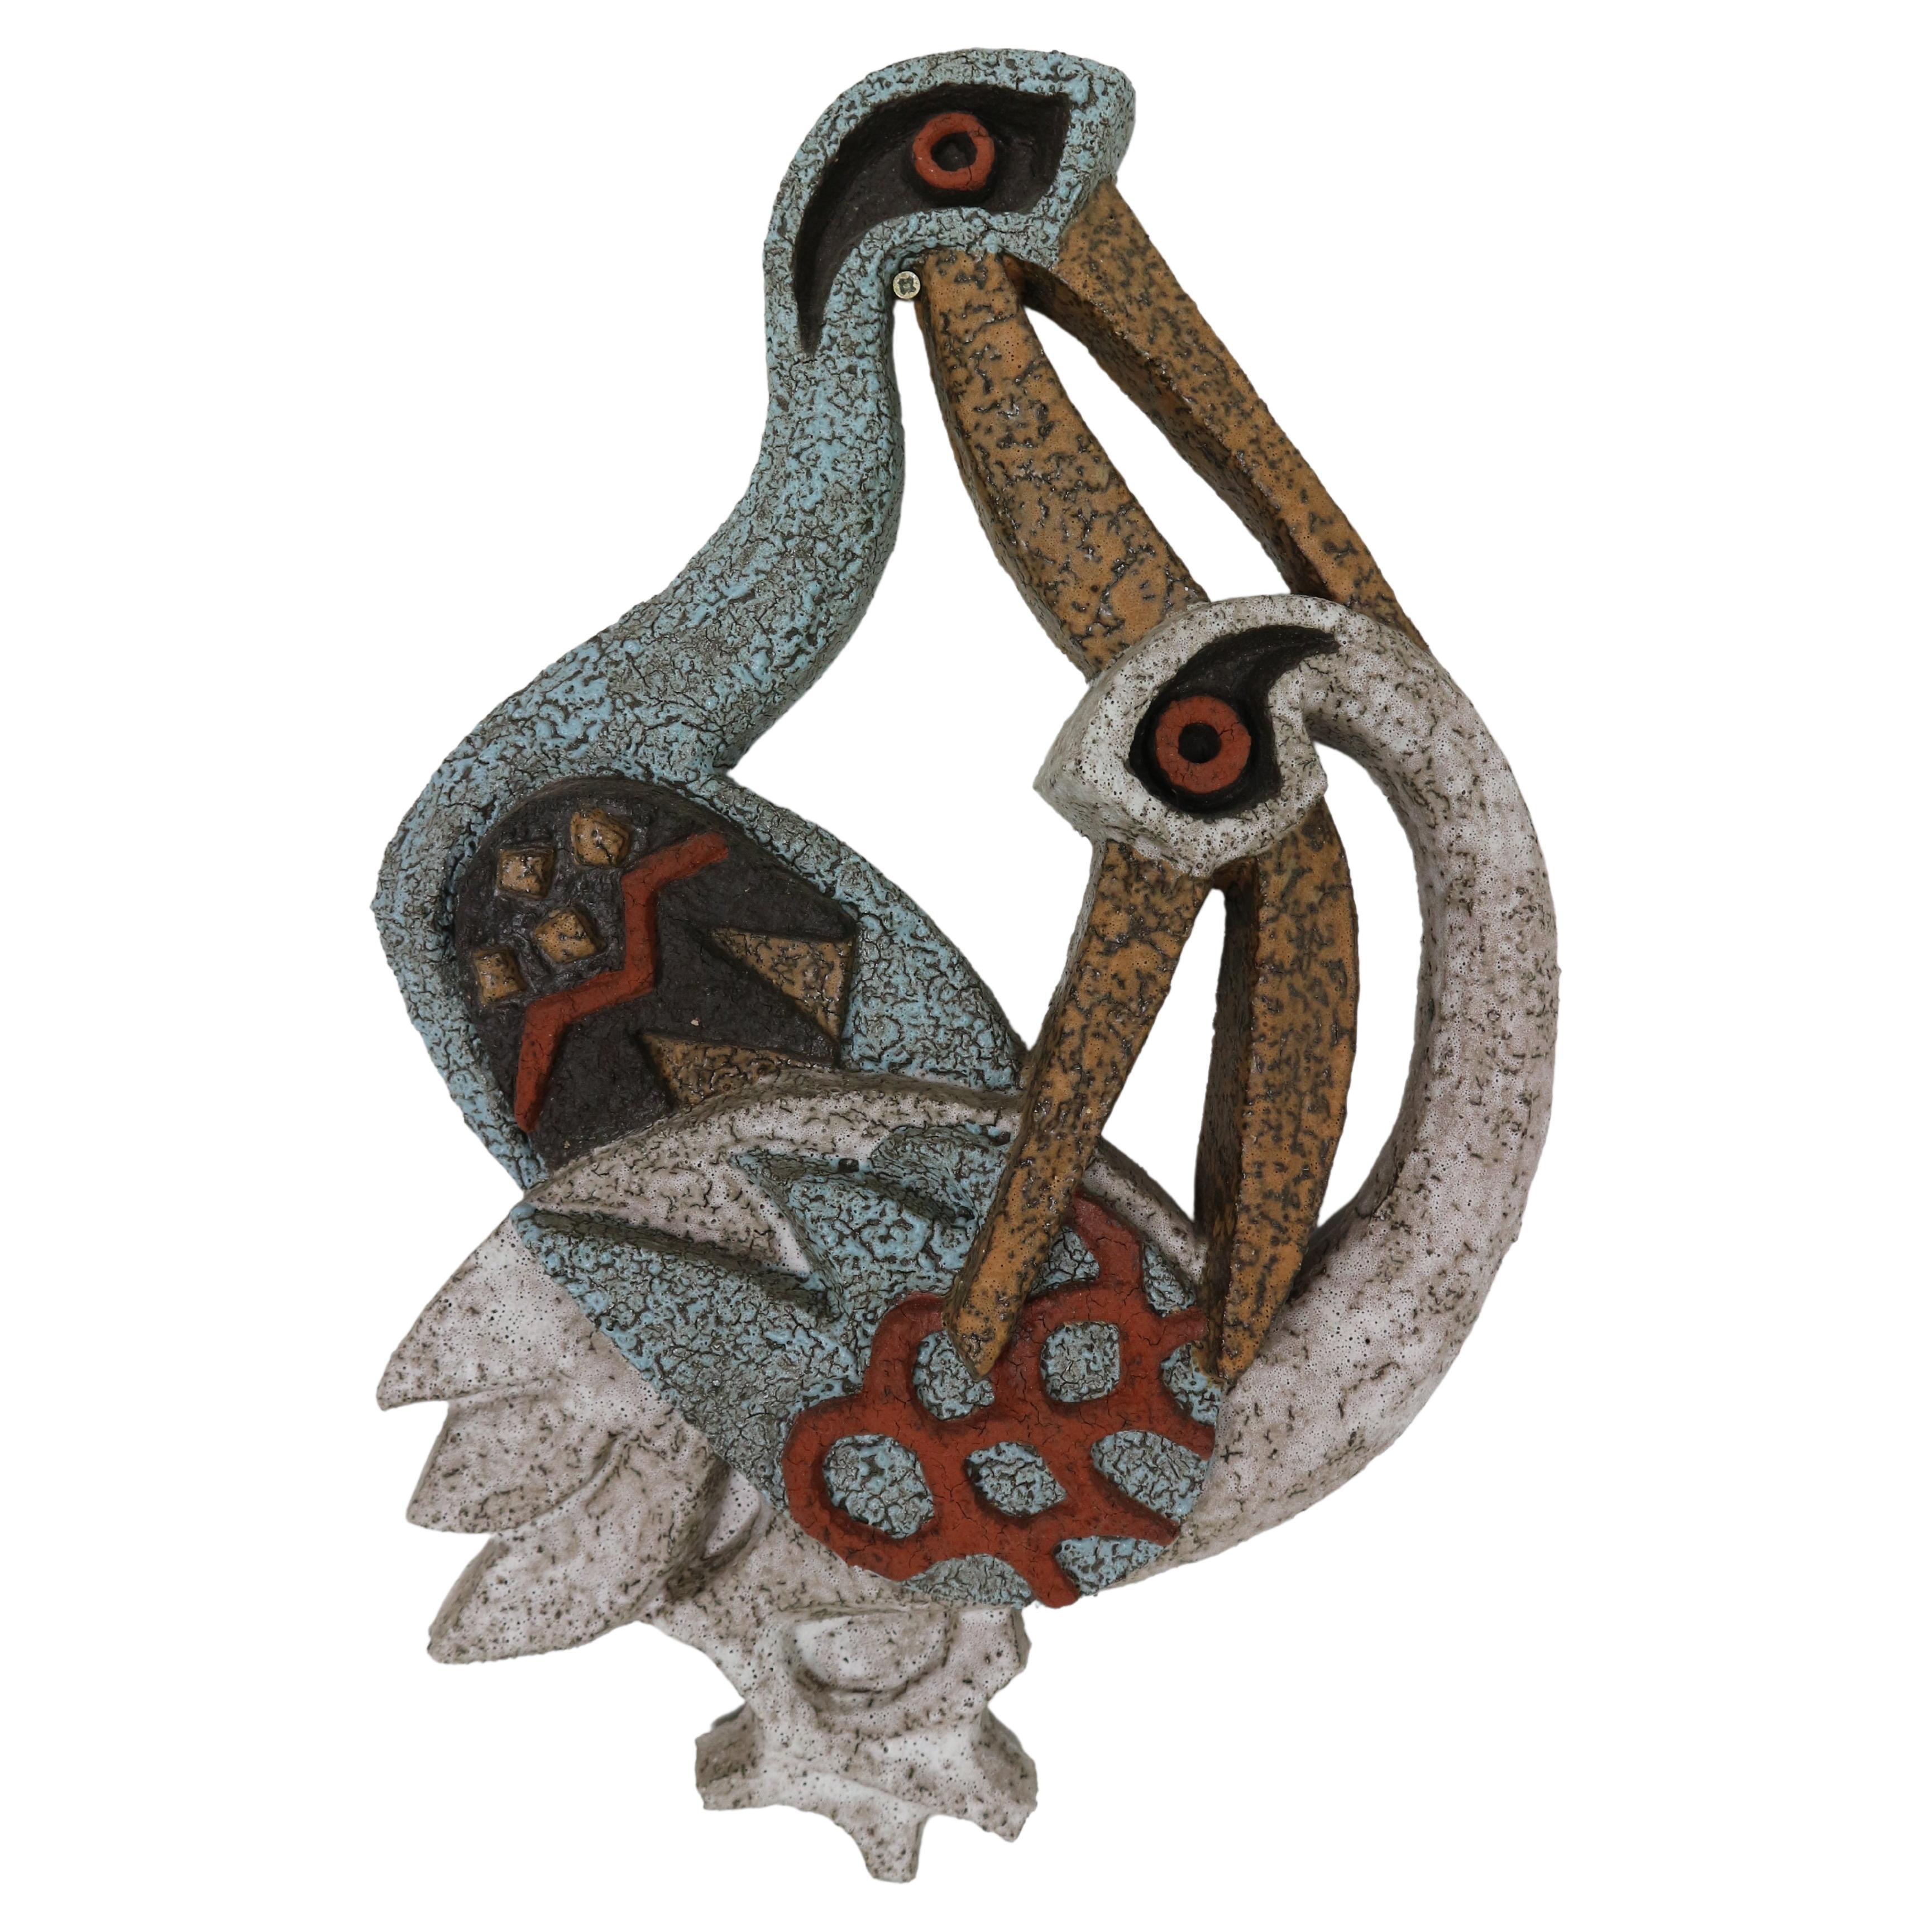  ceramic pelican wall sculpture, designed by Joop Puntman 1950s